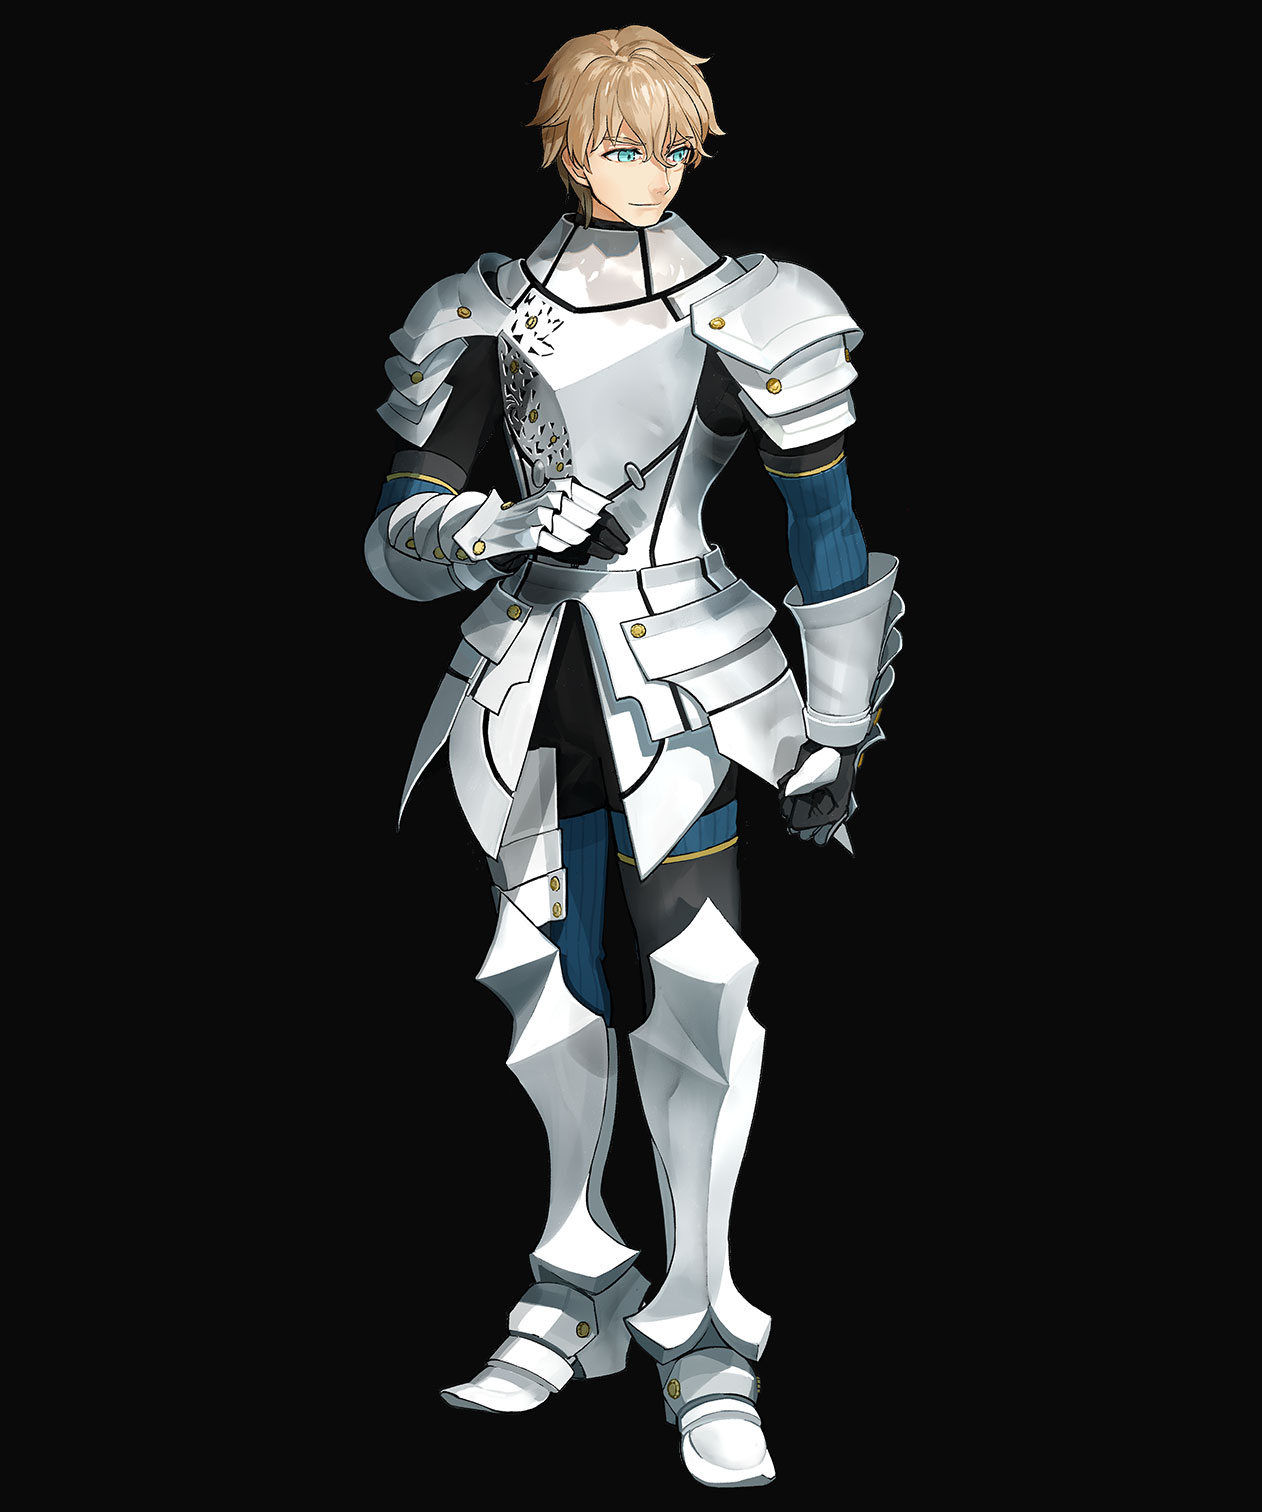 Fate/EXTELLA: The Umbral Star - Gawain